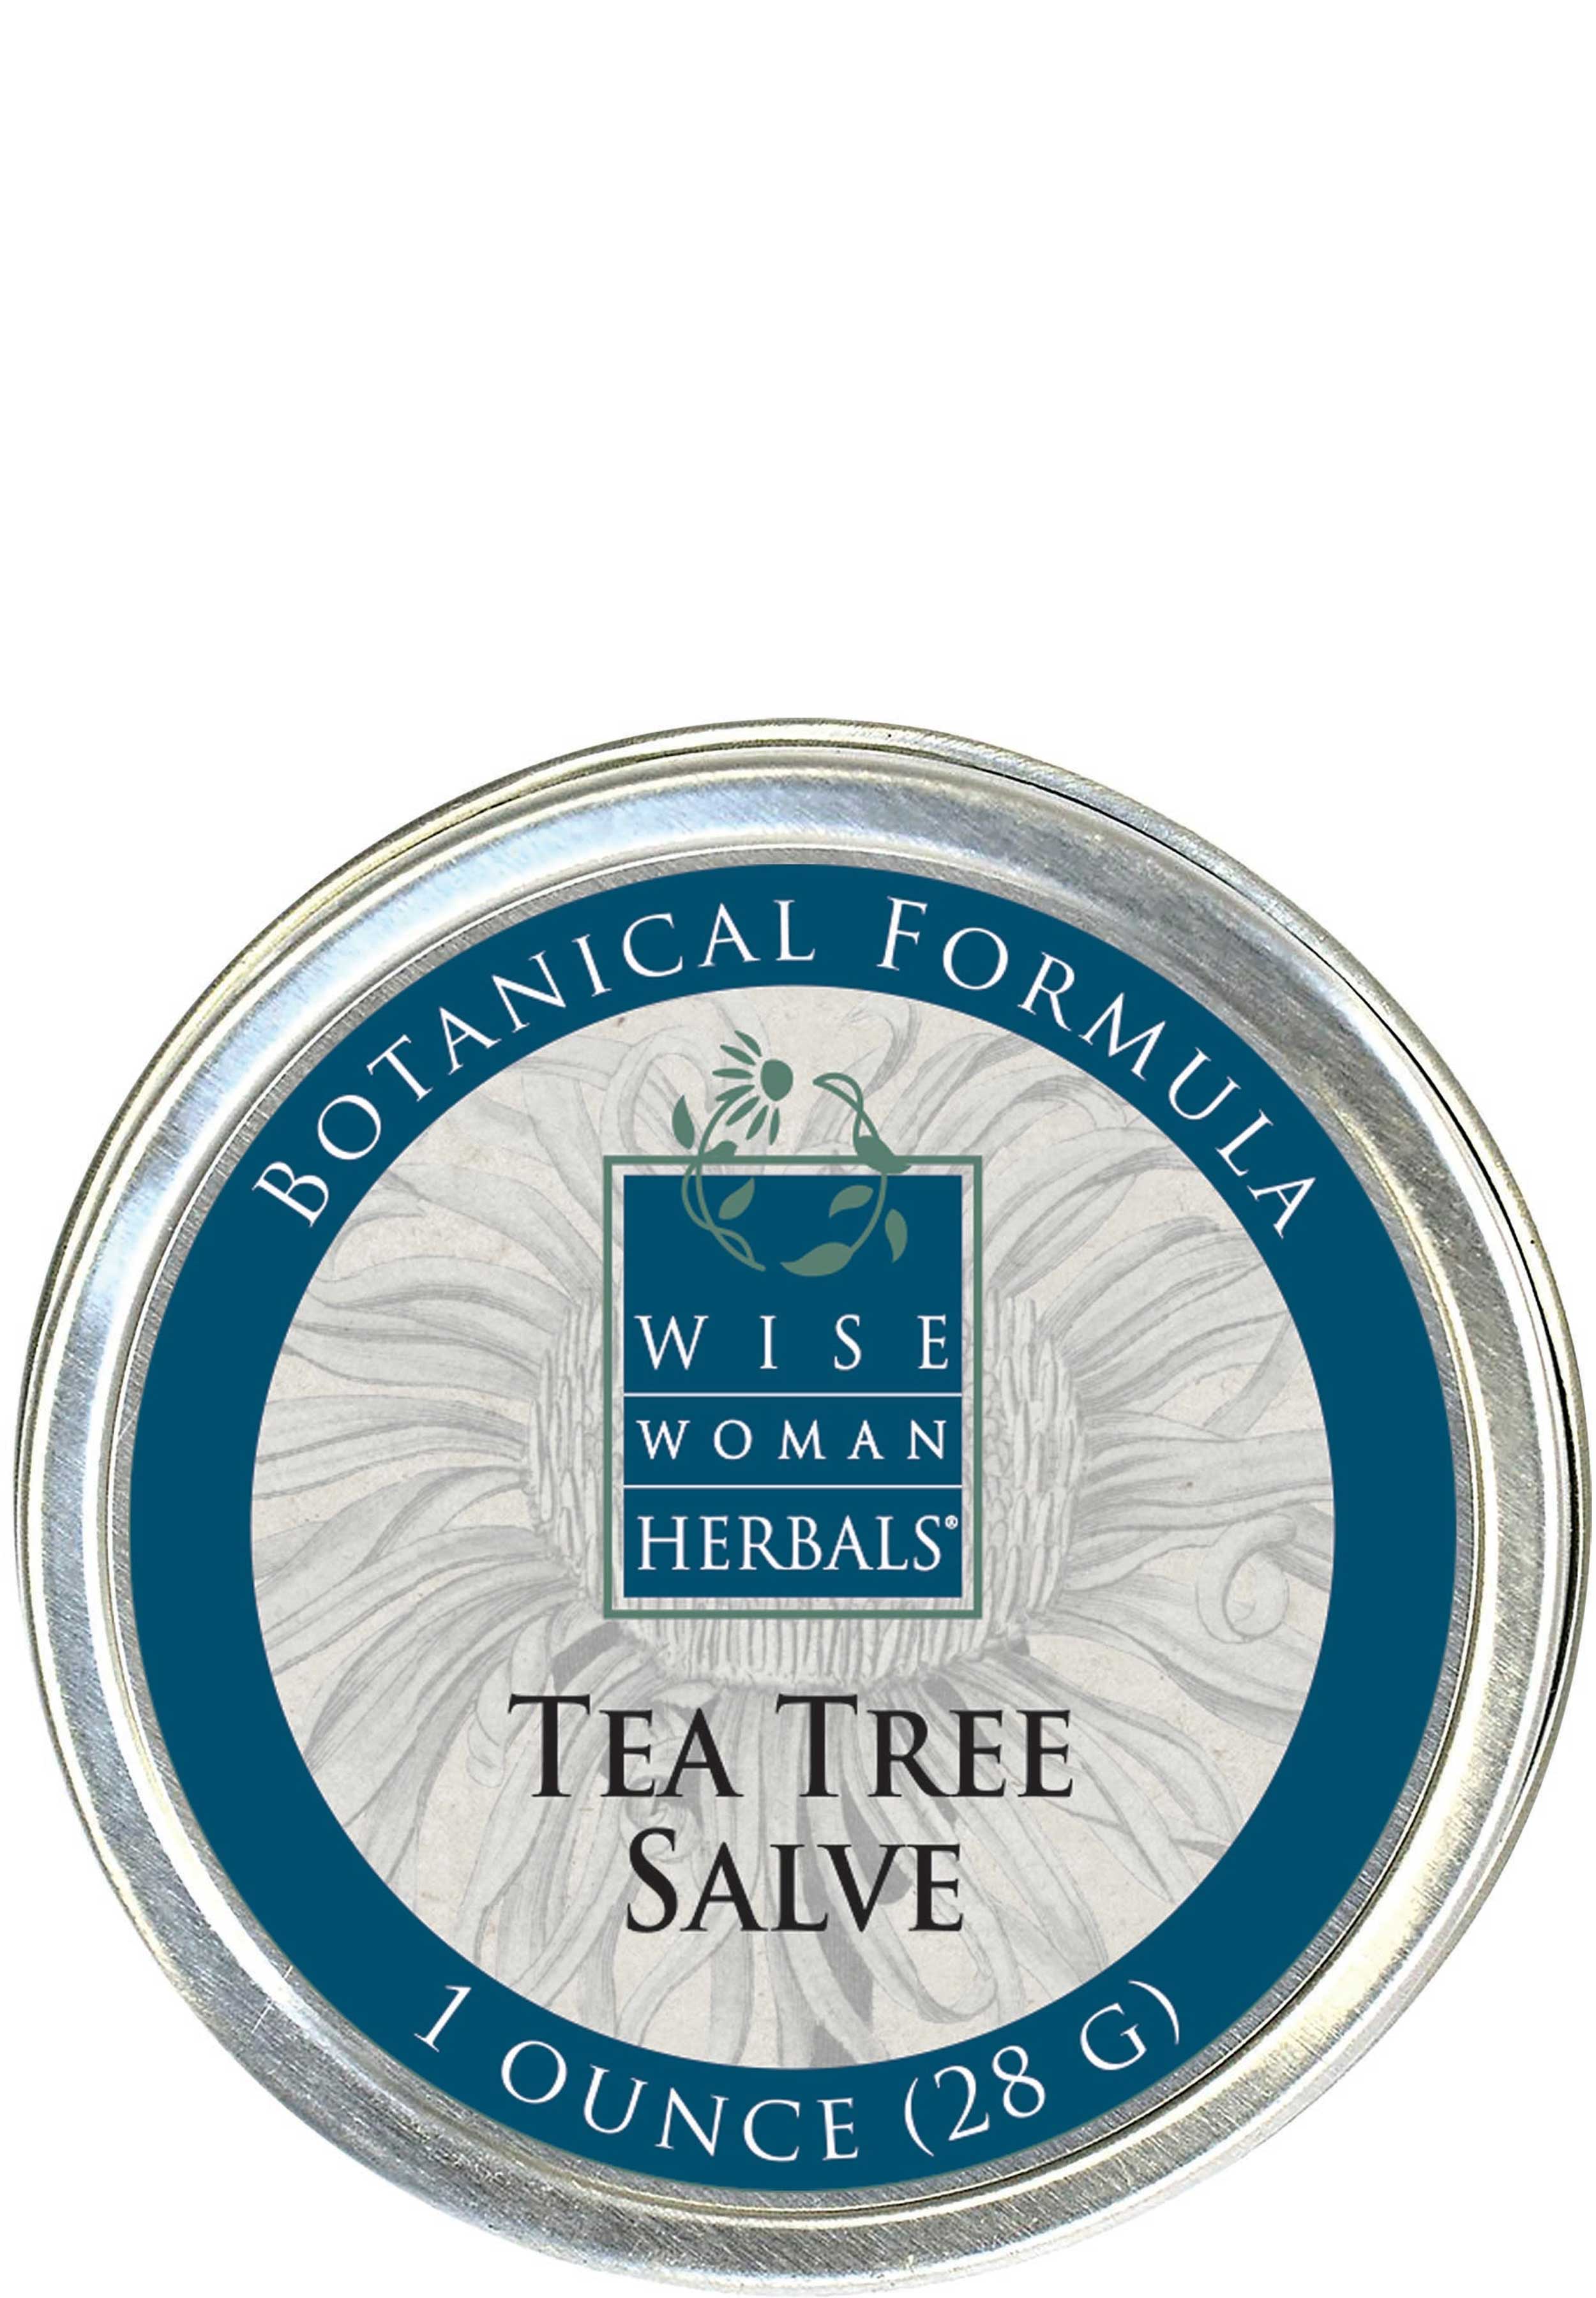 Wise Woman Herbals Tea Tree Salve